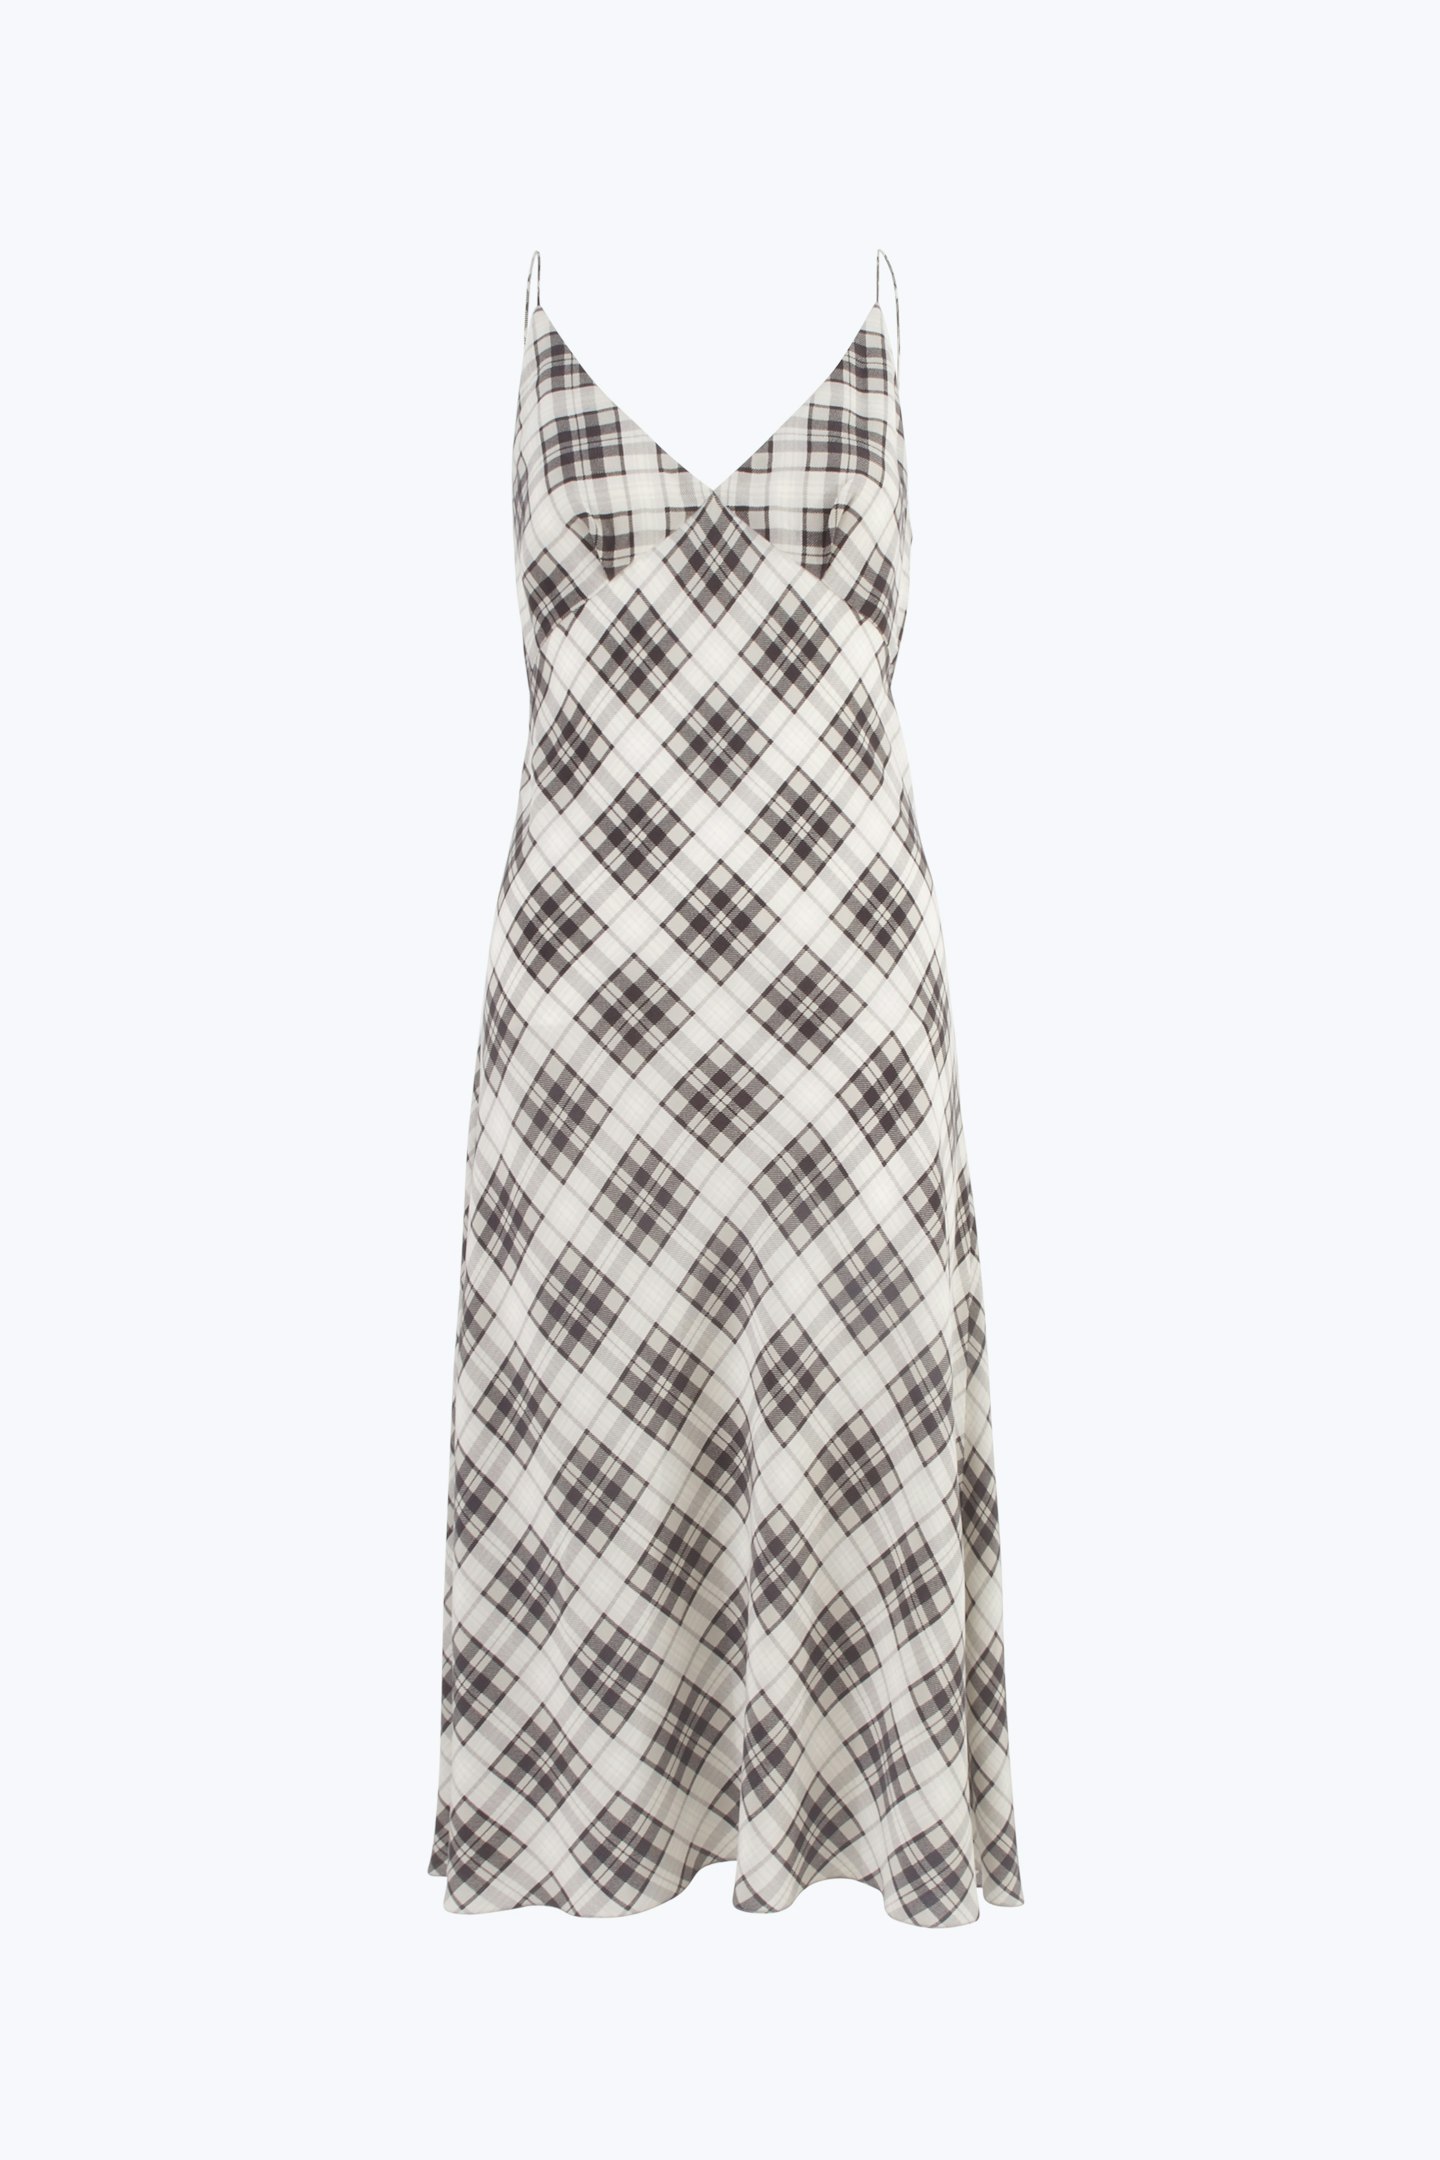 Marc Jacobs, Plaid Strap Midi Dress, £458